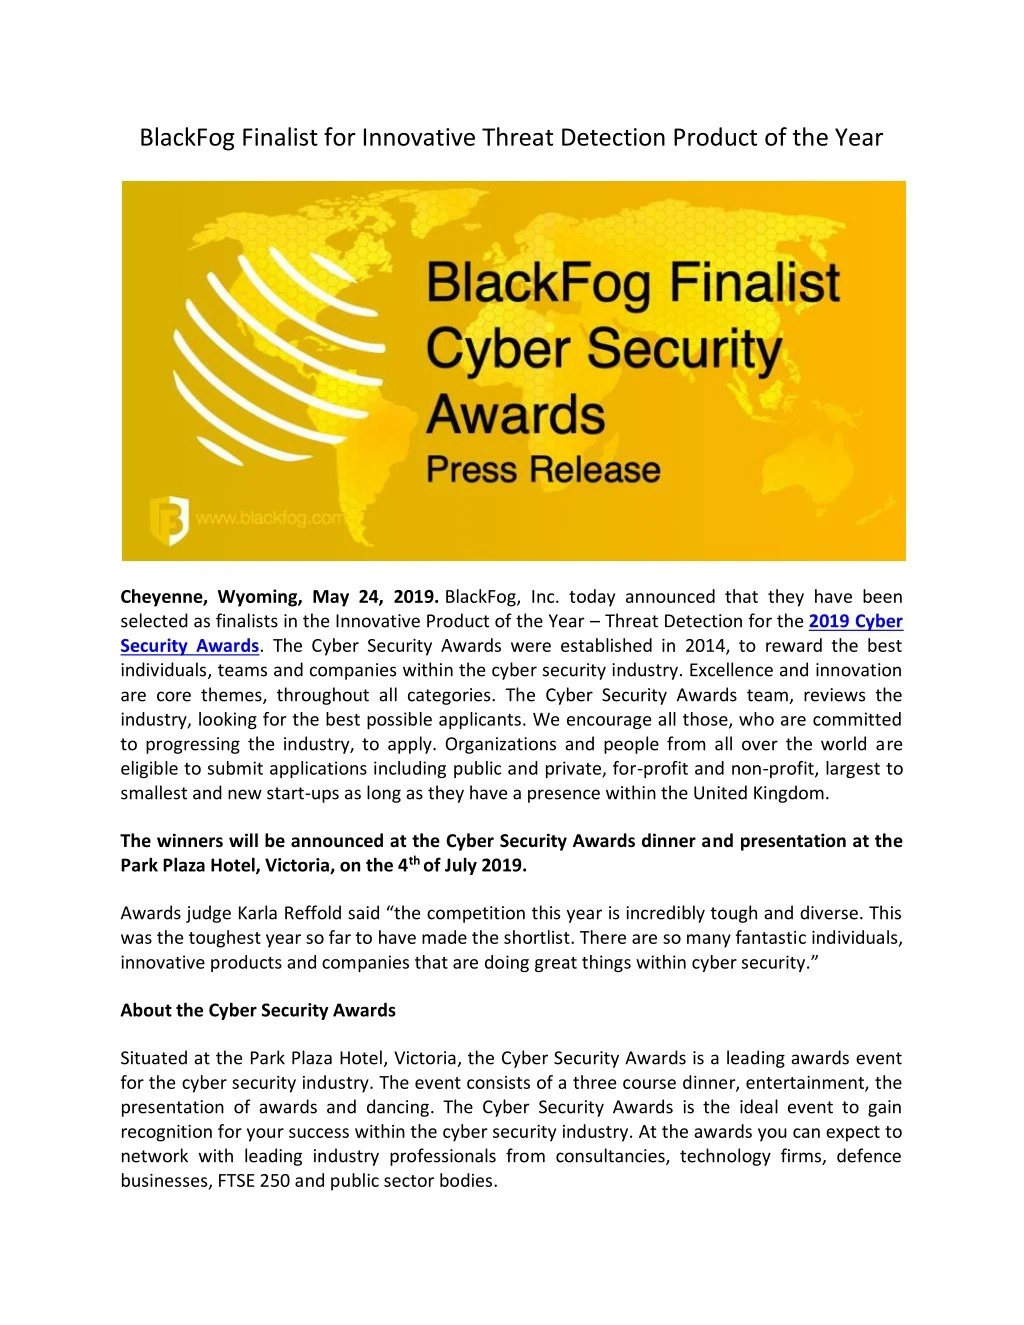 blackfog finalist for innovative threat detection